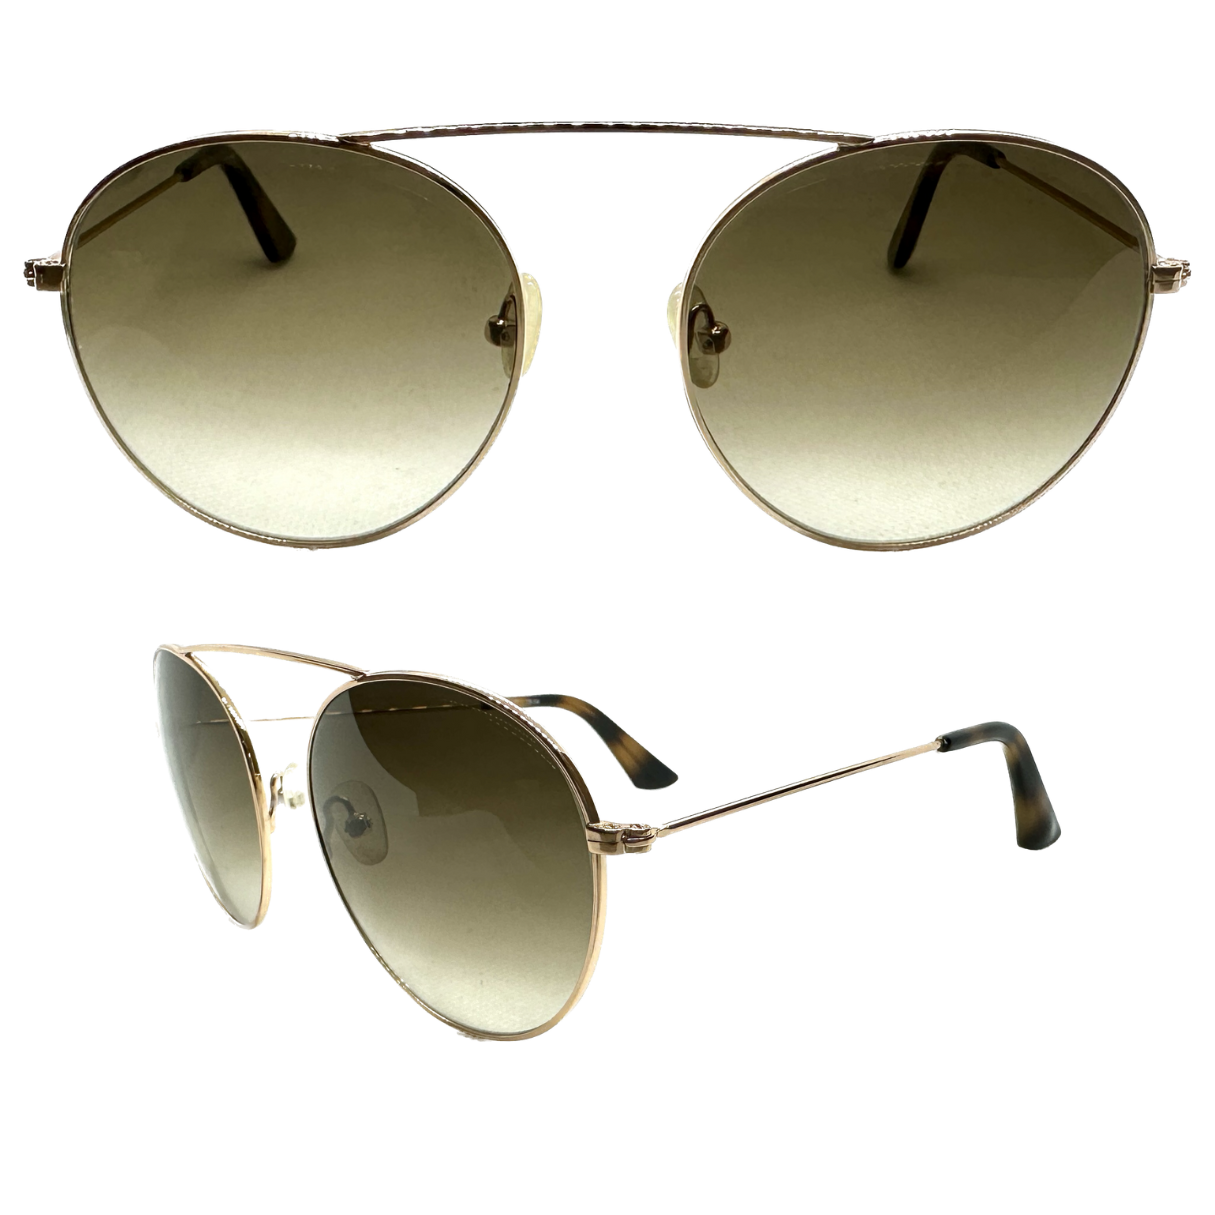 Óculos de sol shades Luxury tb 060 Adulto, design quadrado clássico armação  de policarbonato, lente de policarbonato clássica haste de metal